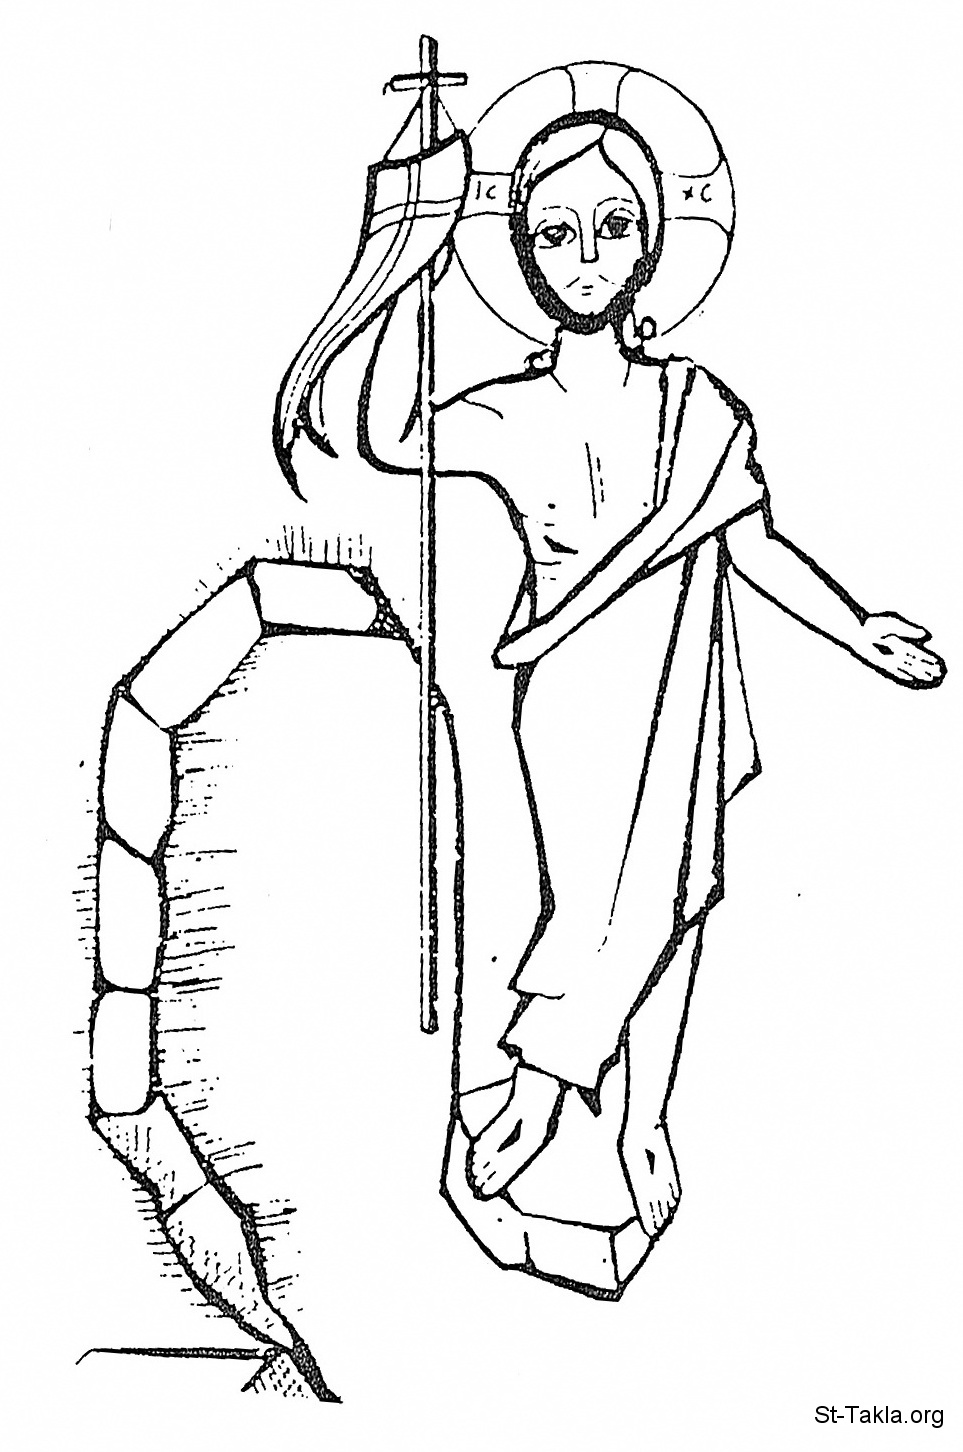 St-Takla.org Image: Resurrection of Jesus Christ, Coptic coloring image صورة في موقع الأنبا تكلا: قيامة الرب يسوع المسيح، صورة قبطية للتلوين